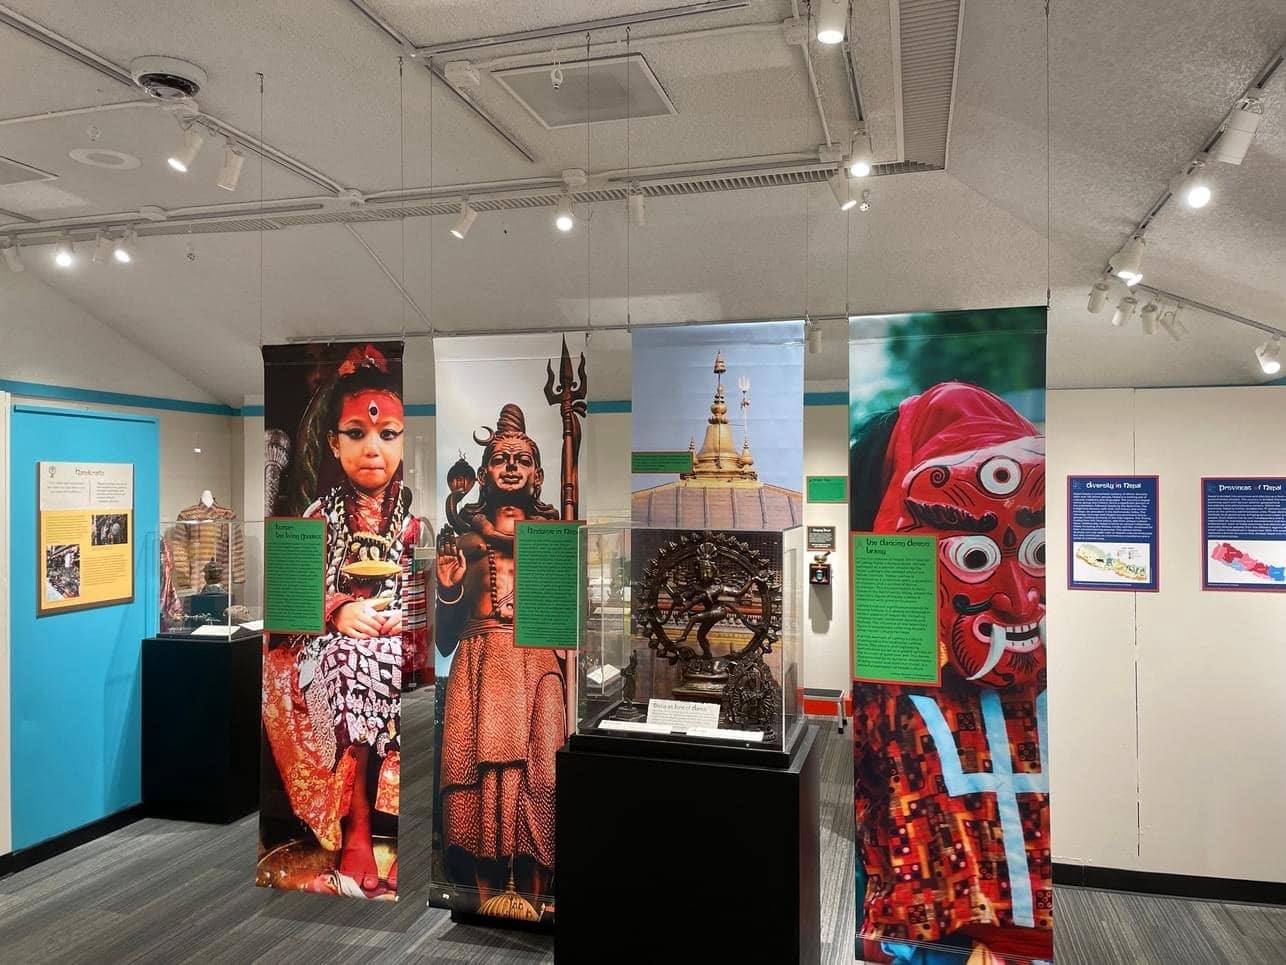 Nepali art and culture shine in Aurora History Museum